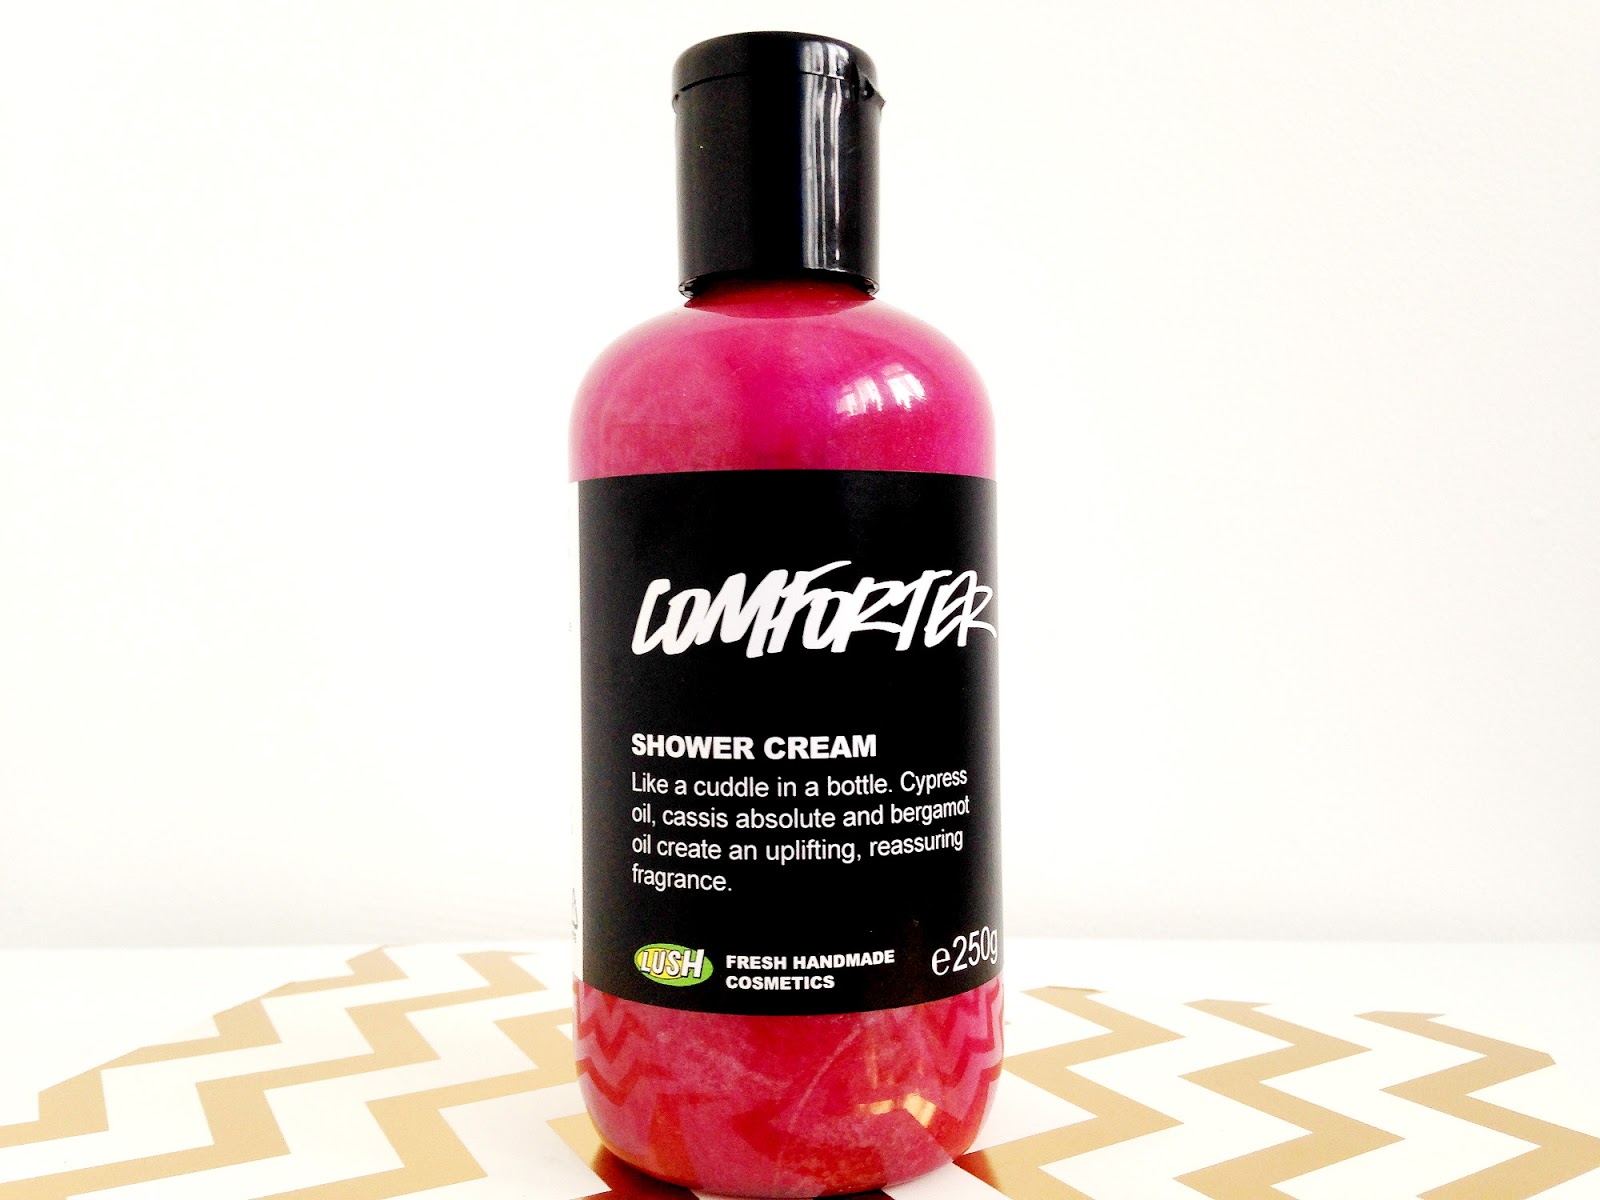 The Lush Comforter Moisturising Shower Cream